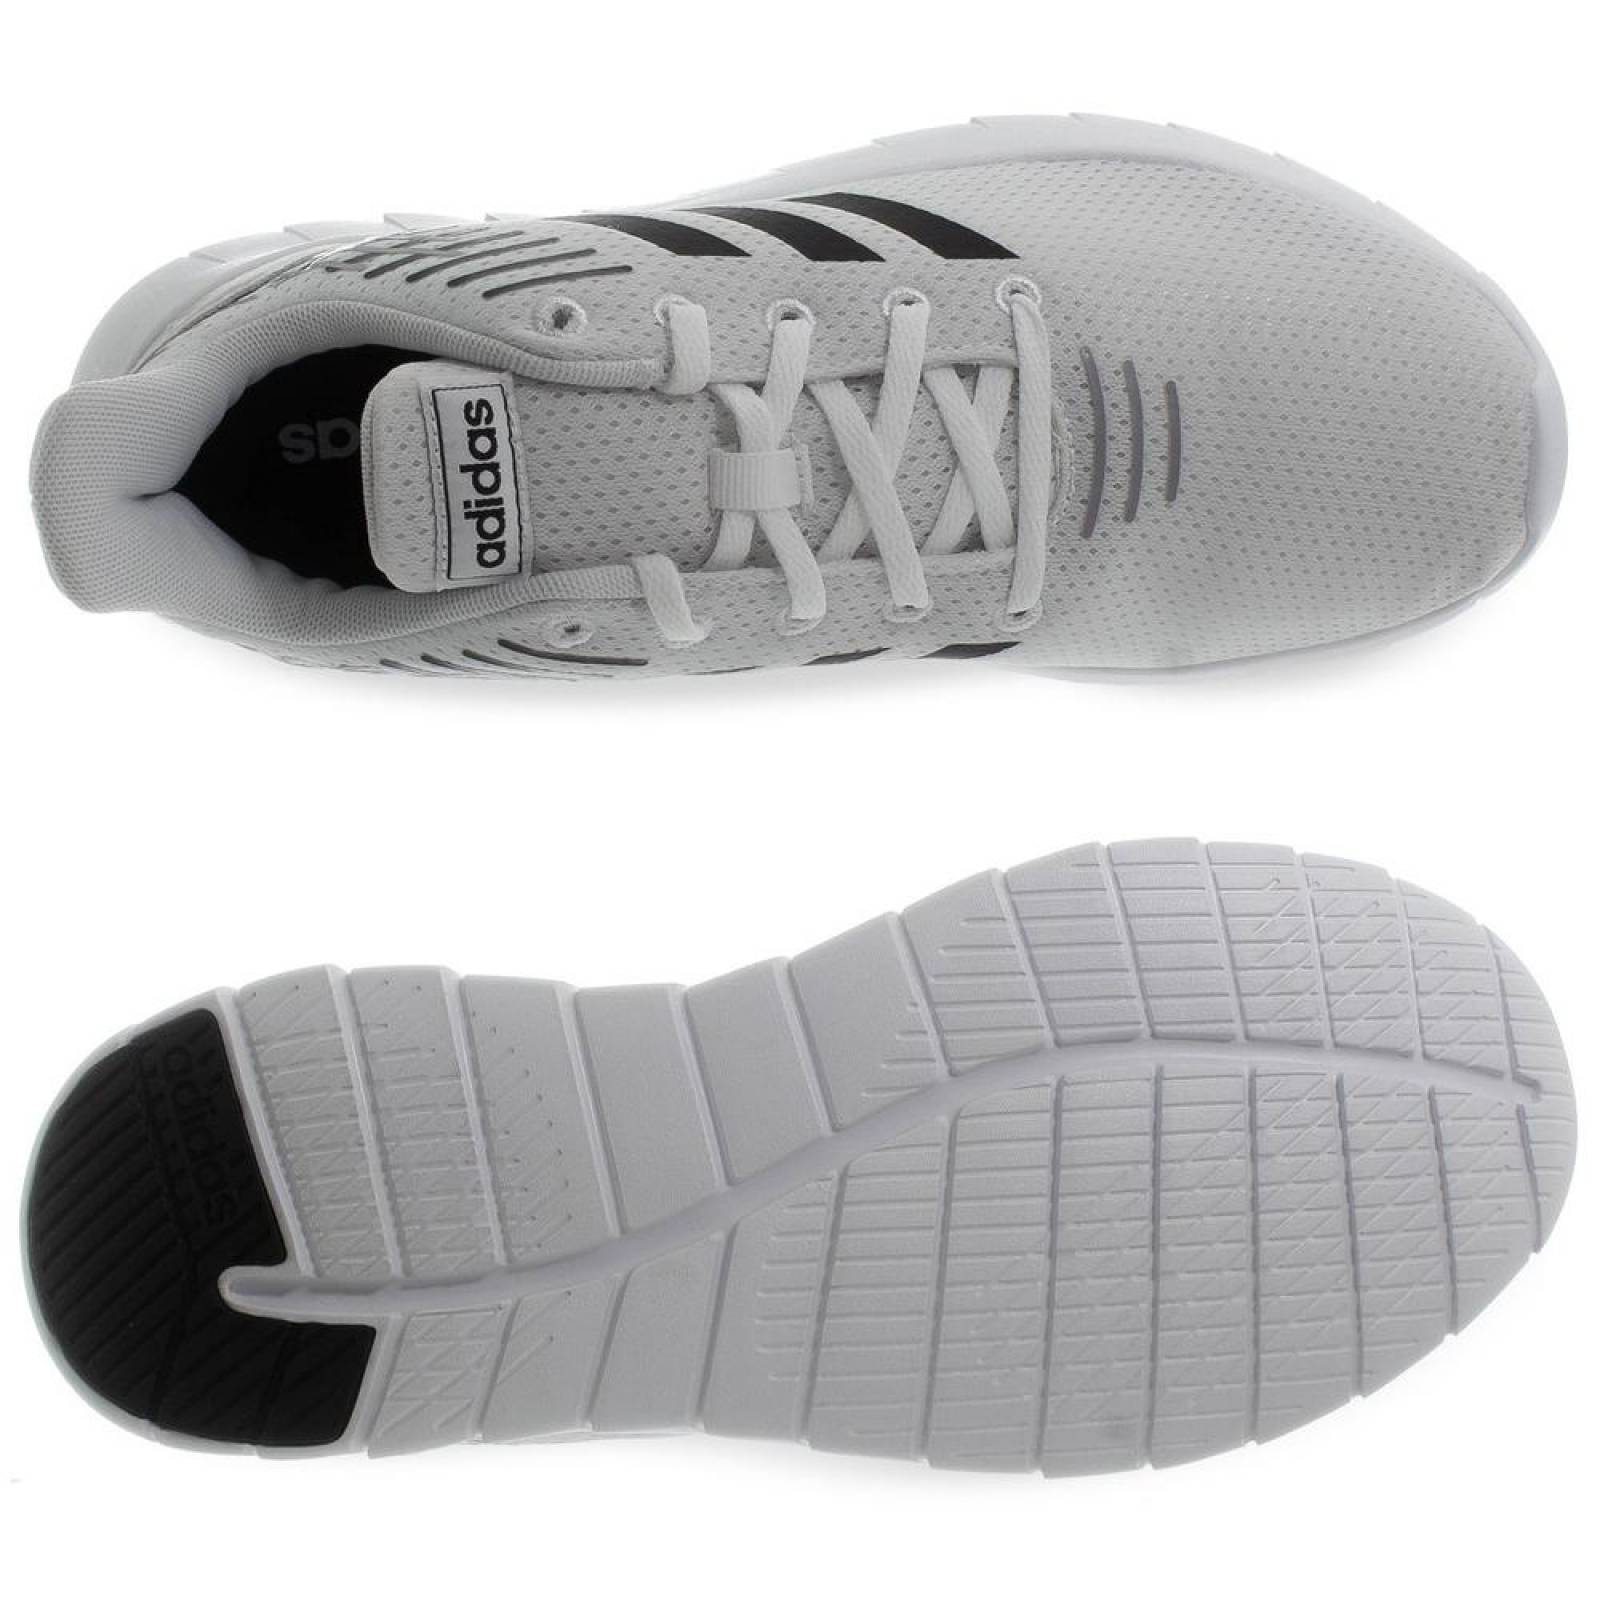 Tenis Adidas Asweerun - F36332 - Blanco - Hombre 